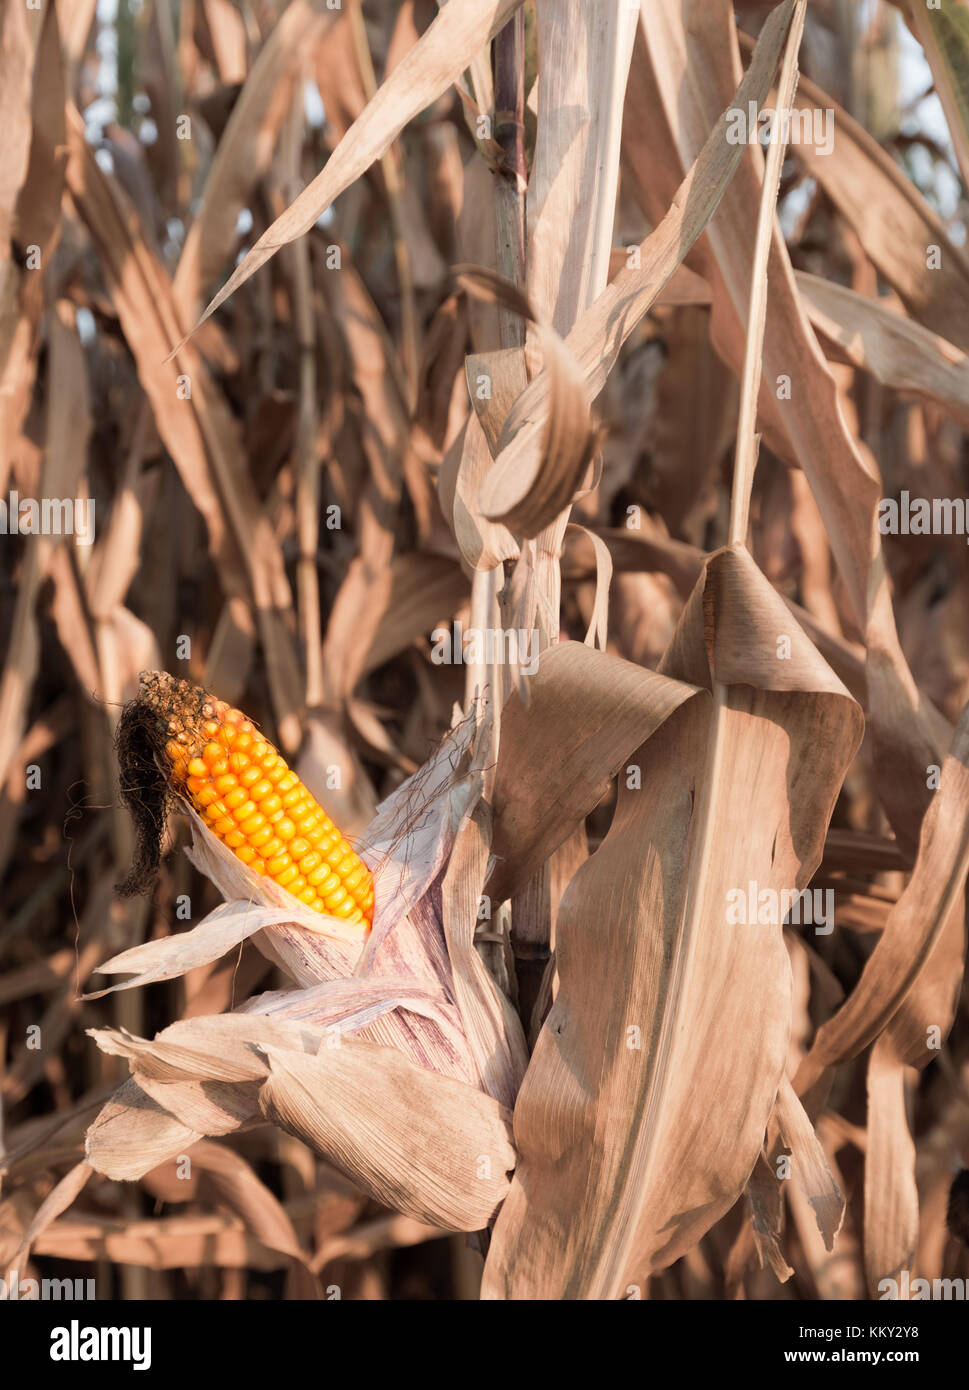 A ripe corncob on the plant Stock Photo